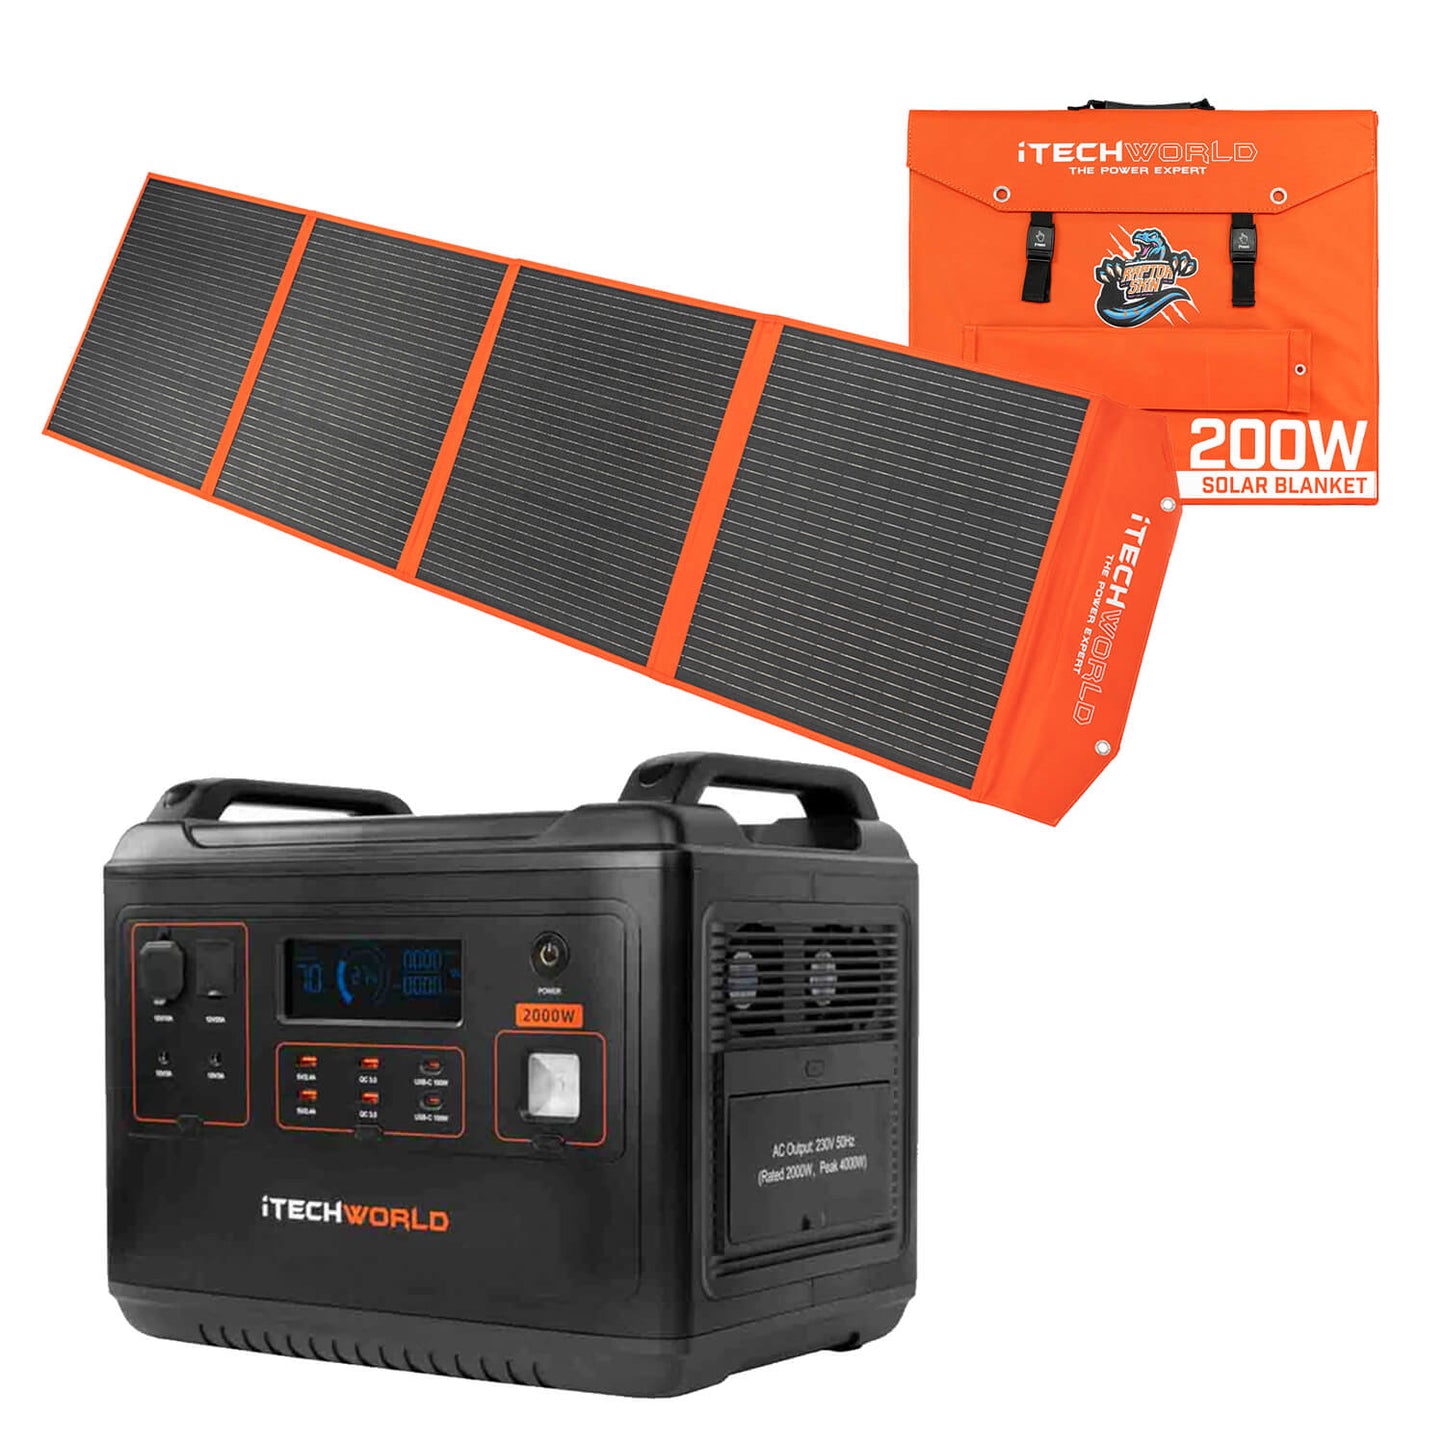 Elite Solar Generator Kit - Ps2000 + 200W Solar Blanket Kit